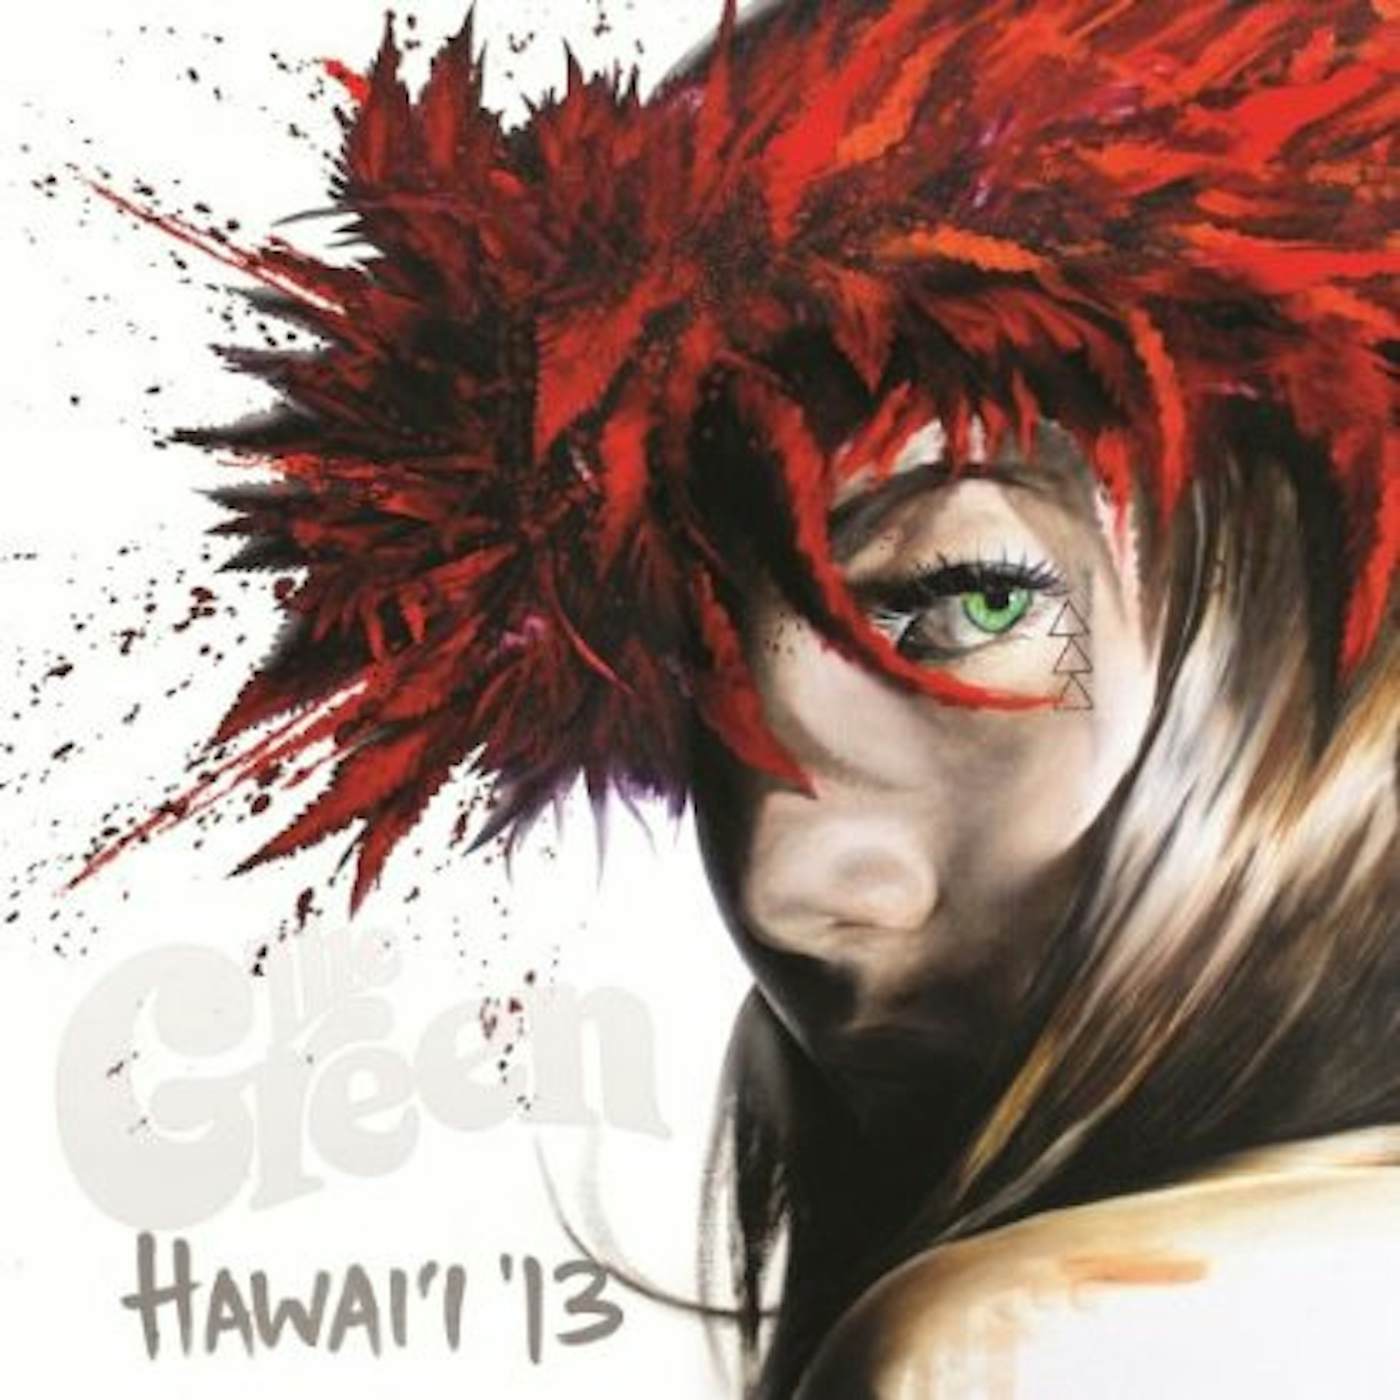 The Green HAWAI'I 13 CD